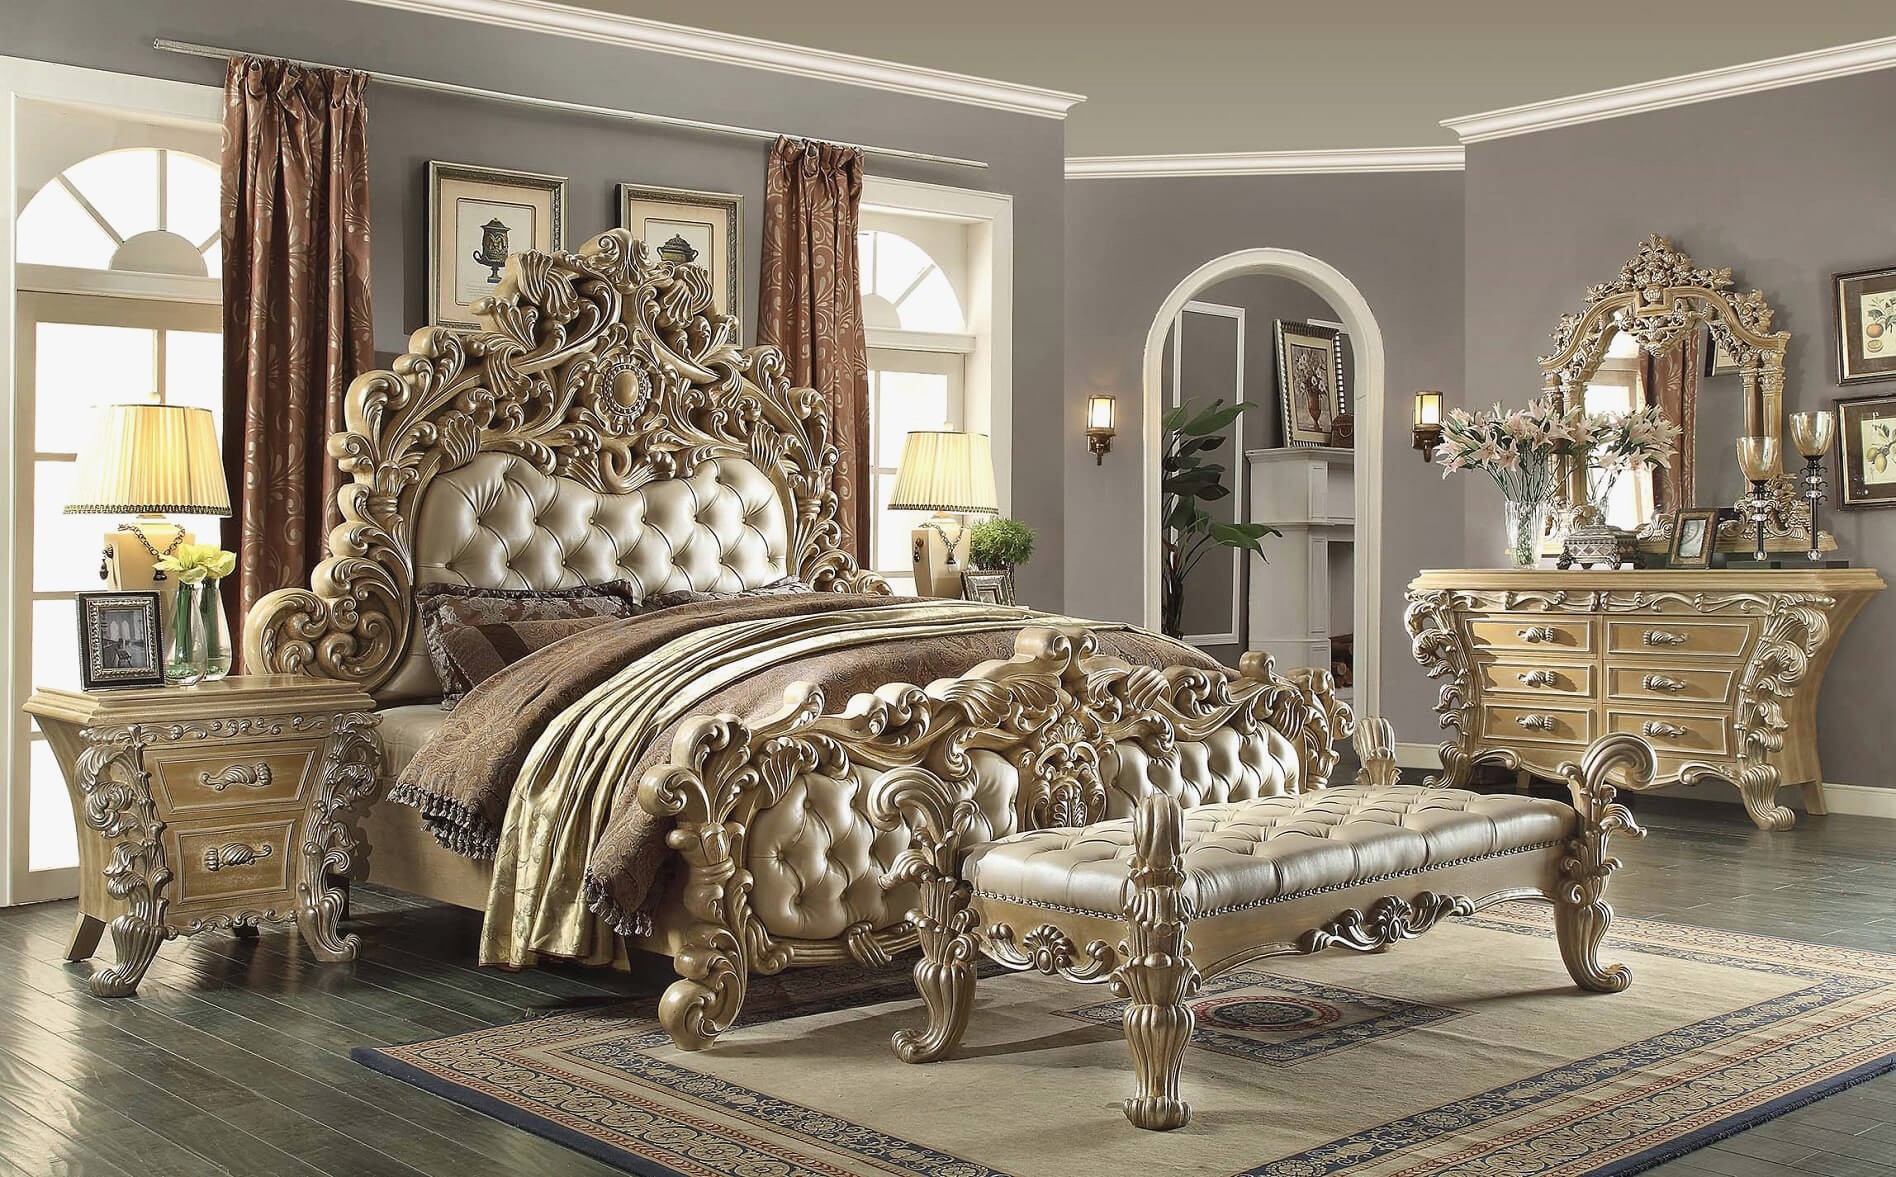 Royal Bedroom Designs Beautiful Royal Bedrooms Boncville - LBFA ...